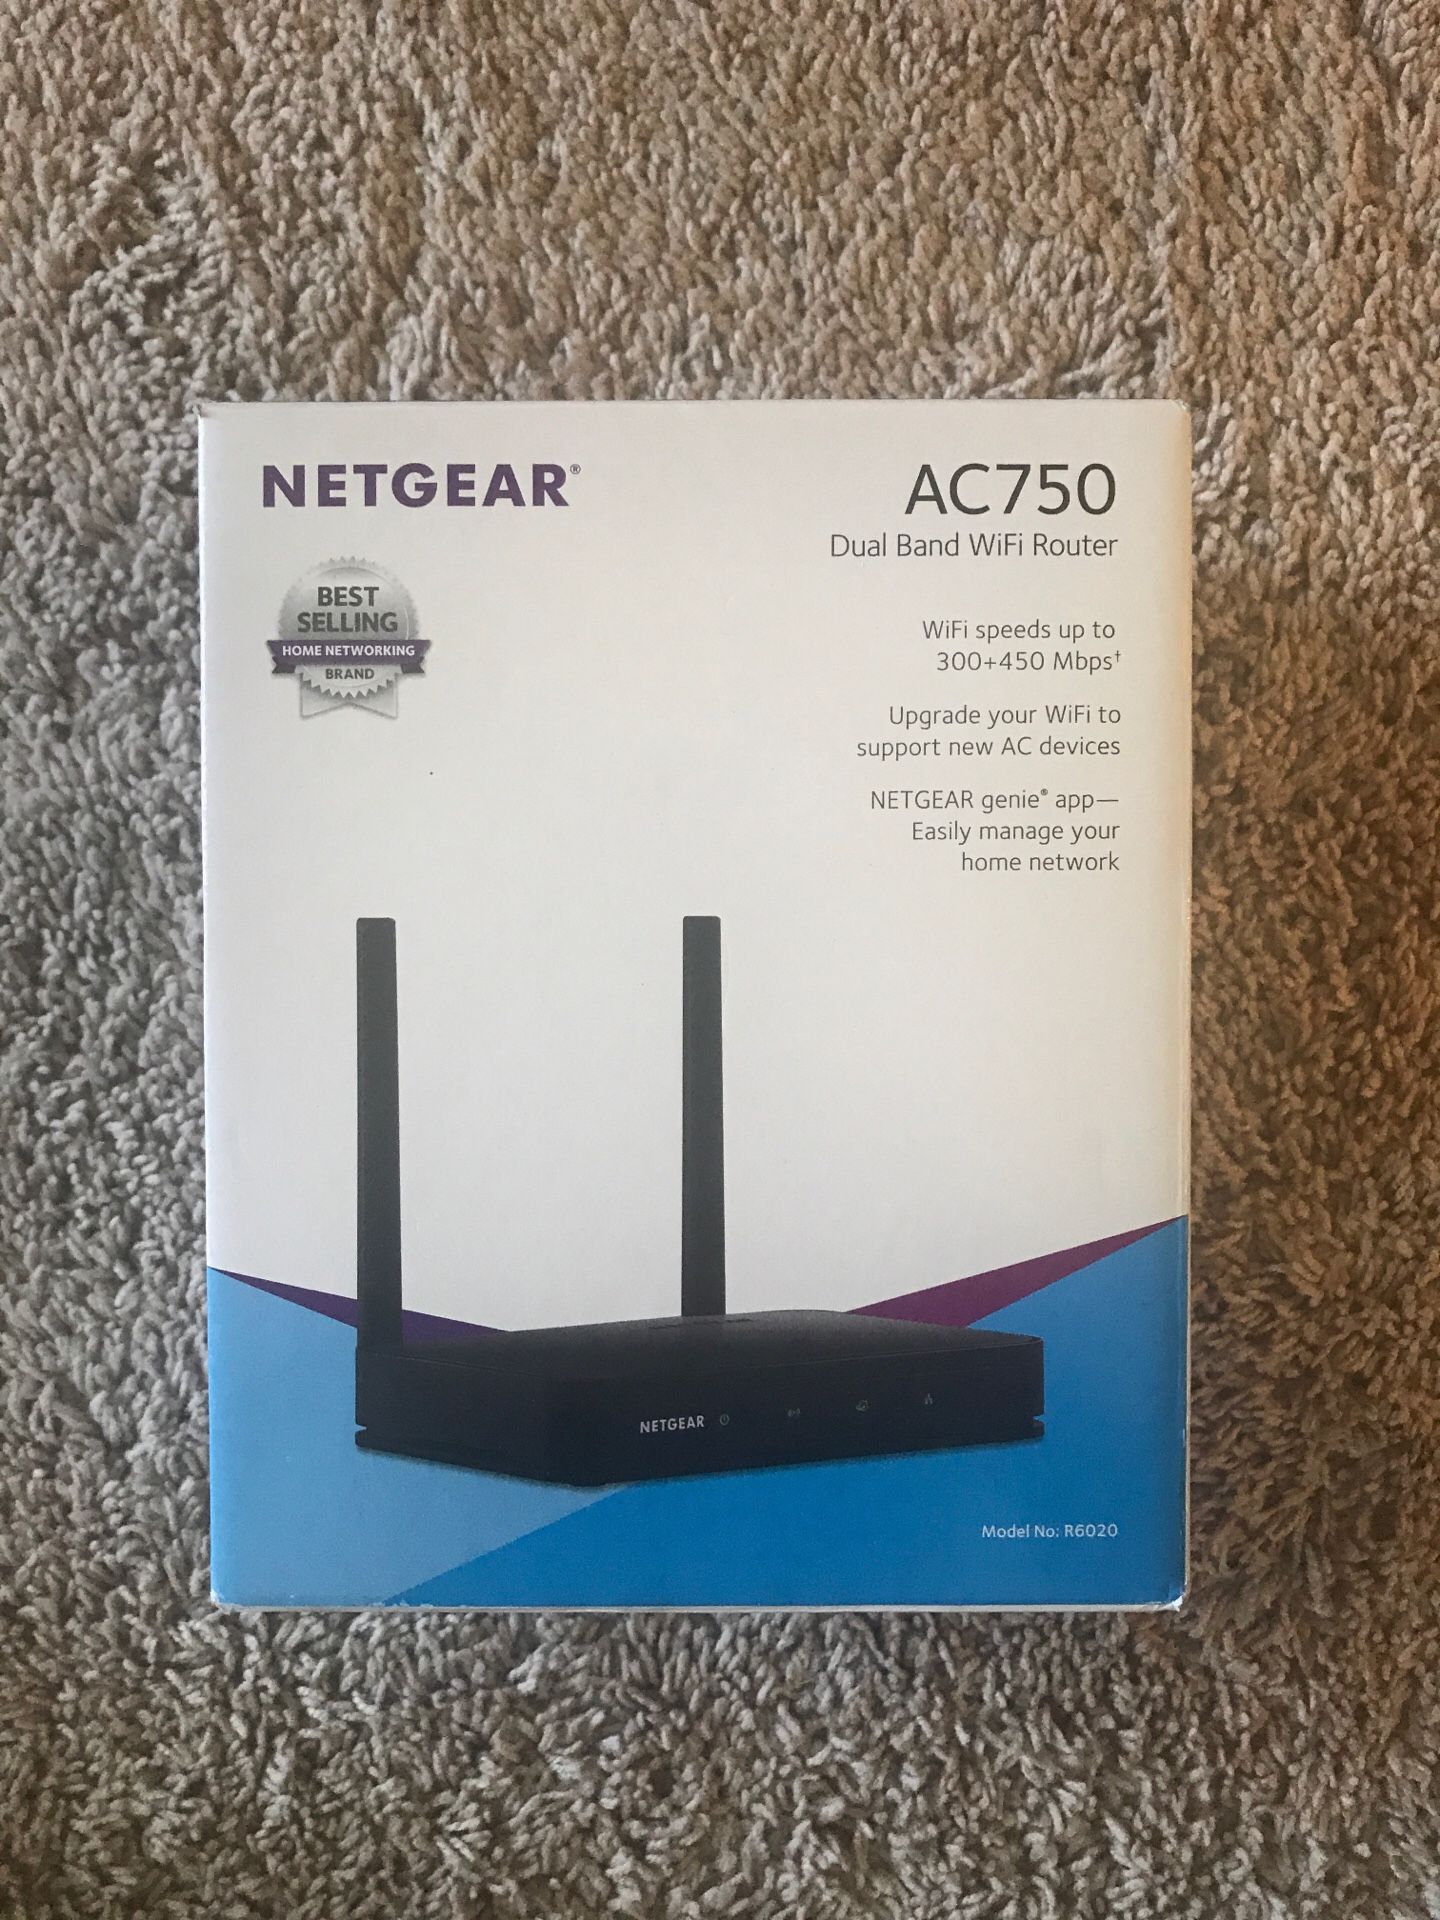 Netgear AC750 Dual Band WiFi Router